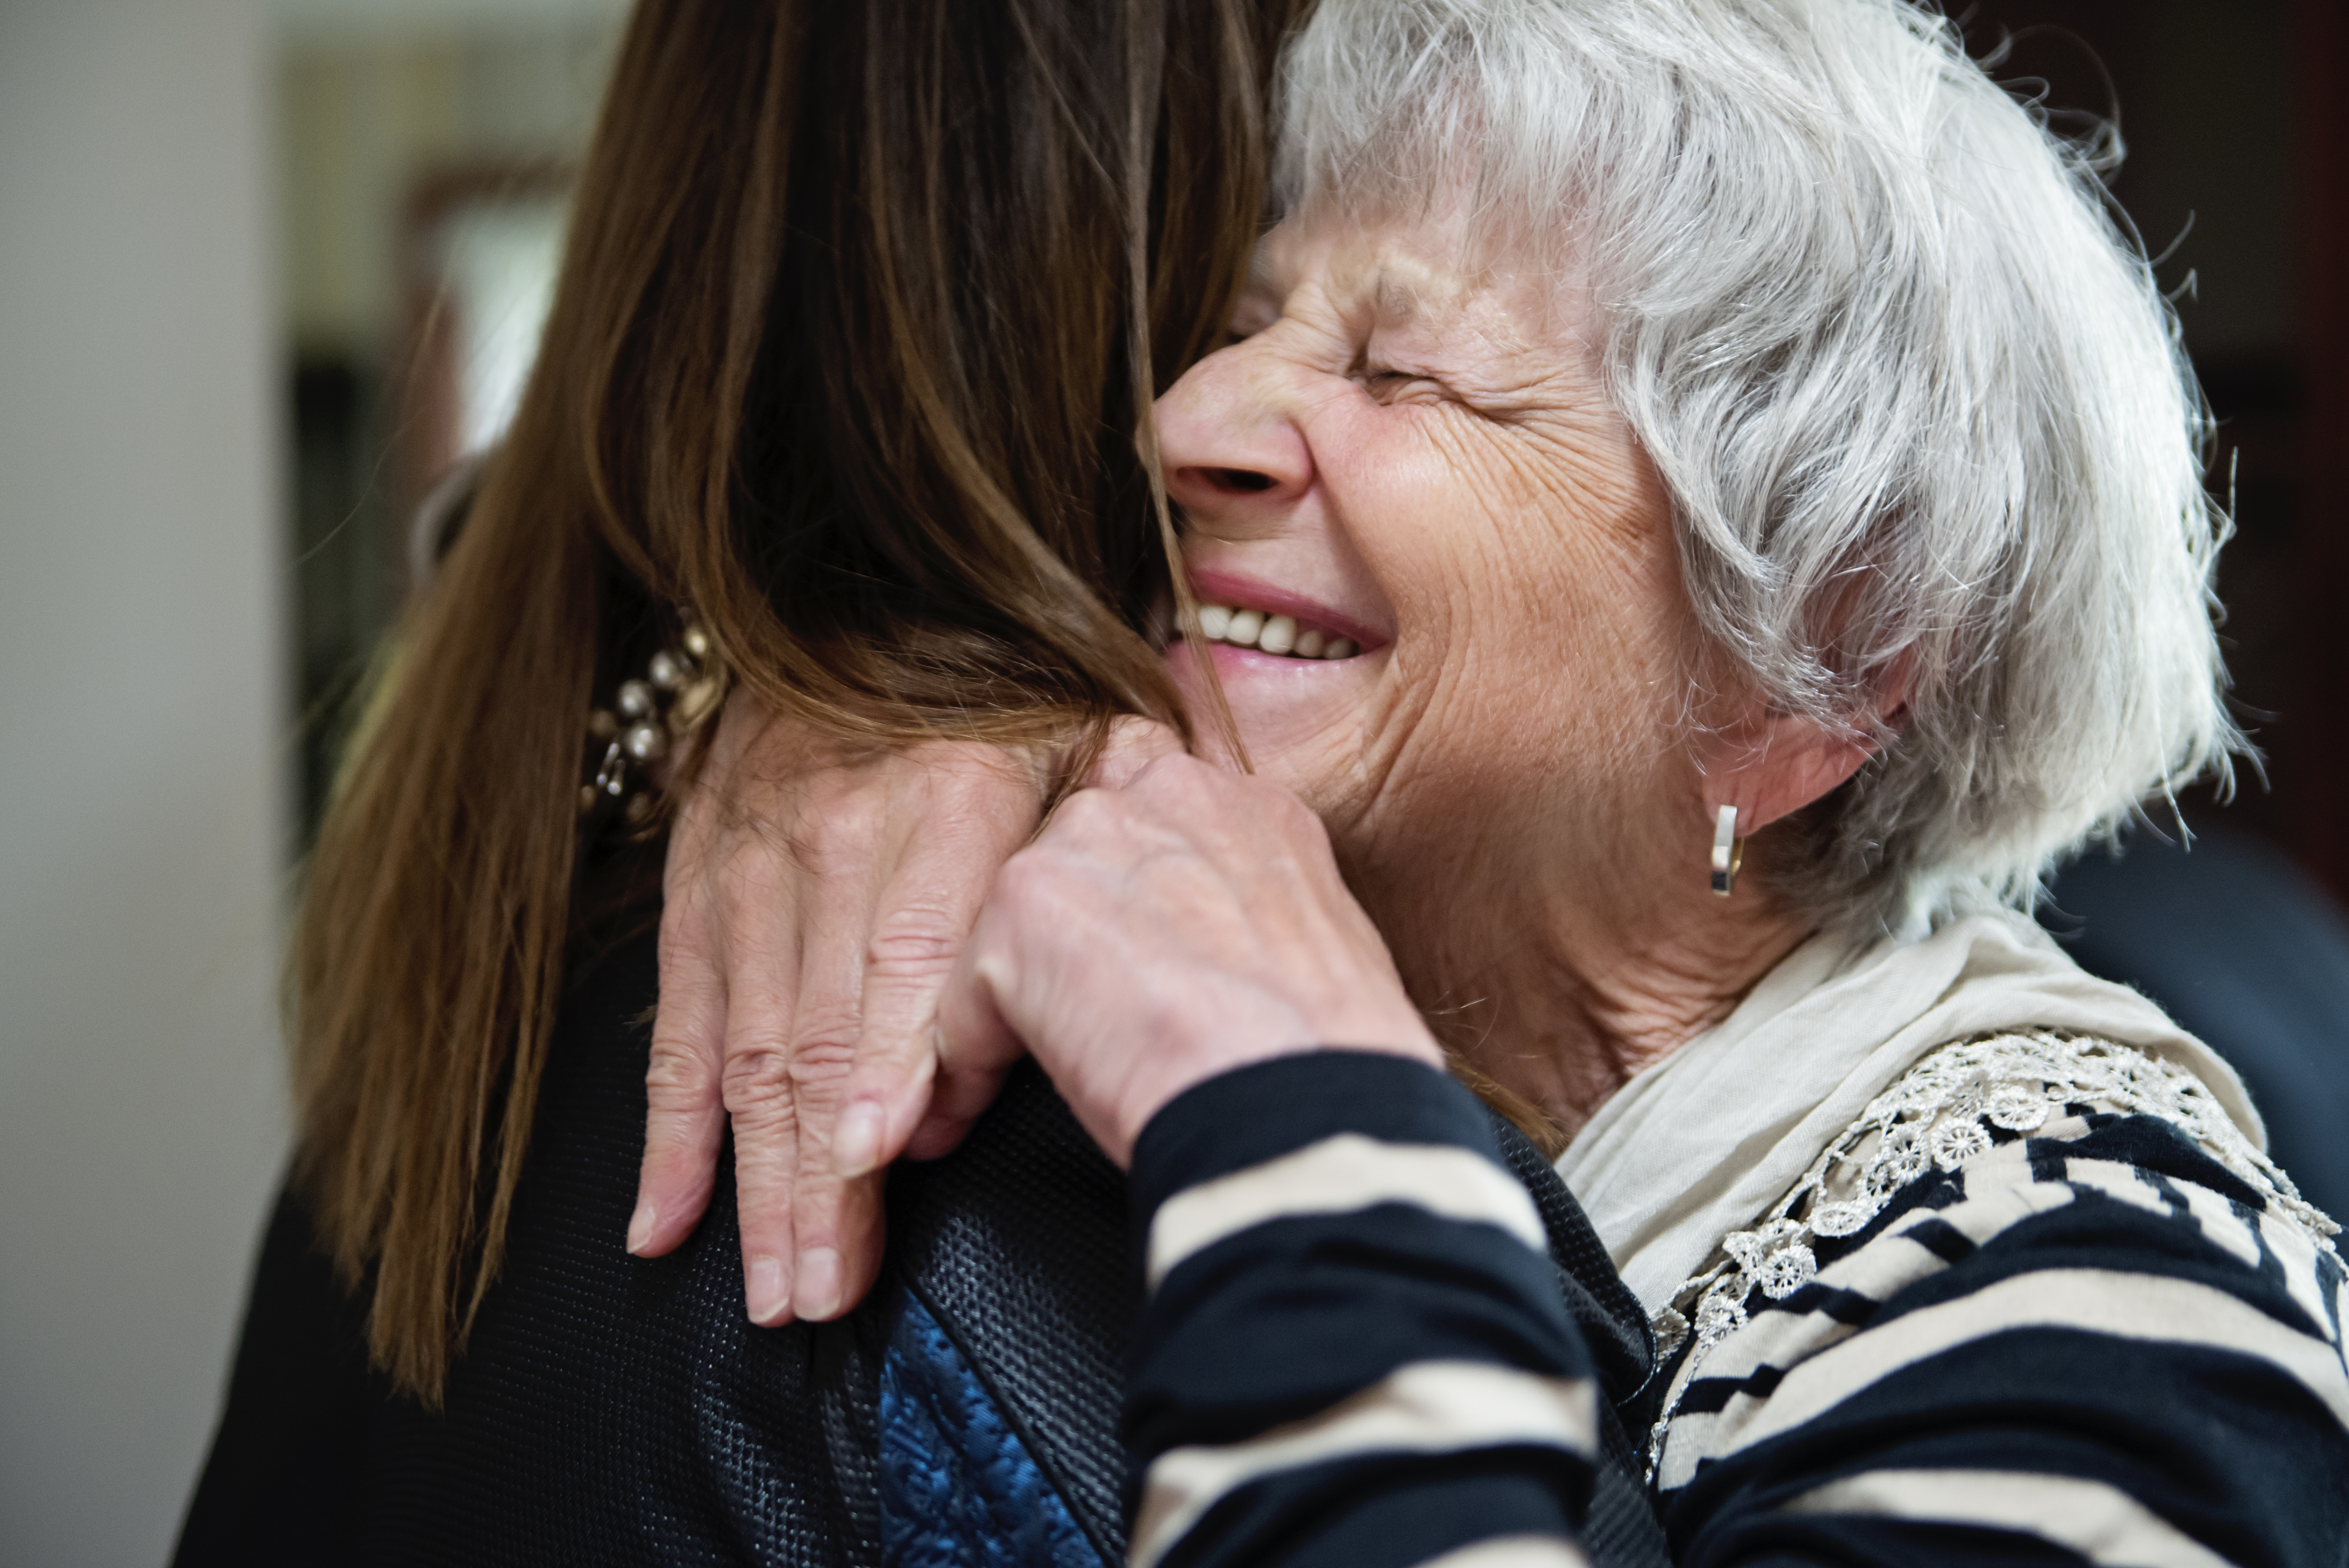 A senior grandmother hugging her granddaughter | Source: Getty Images